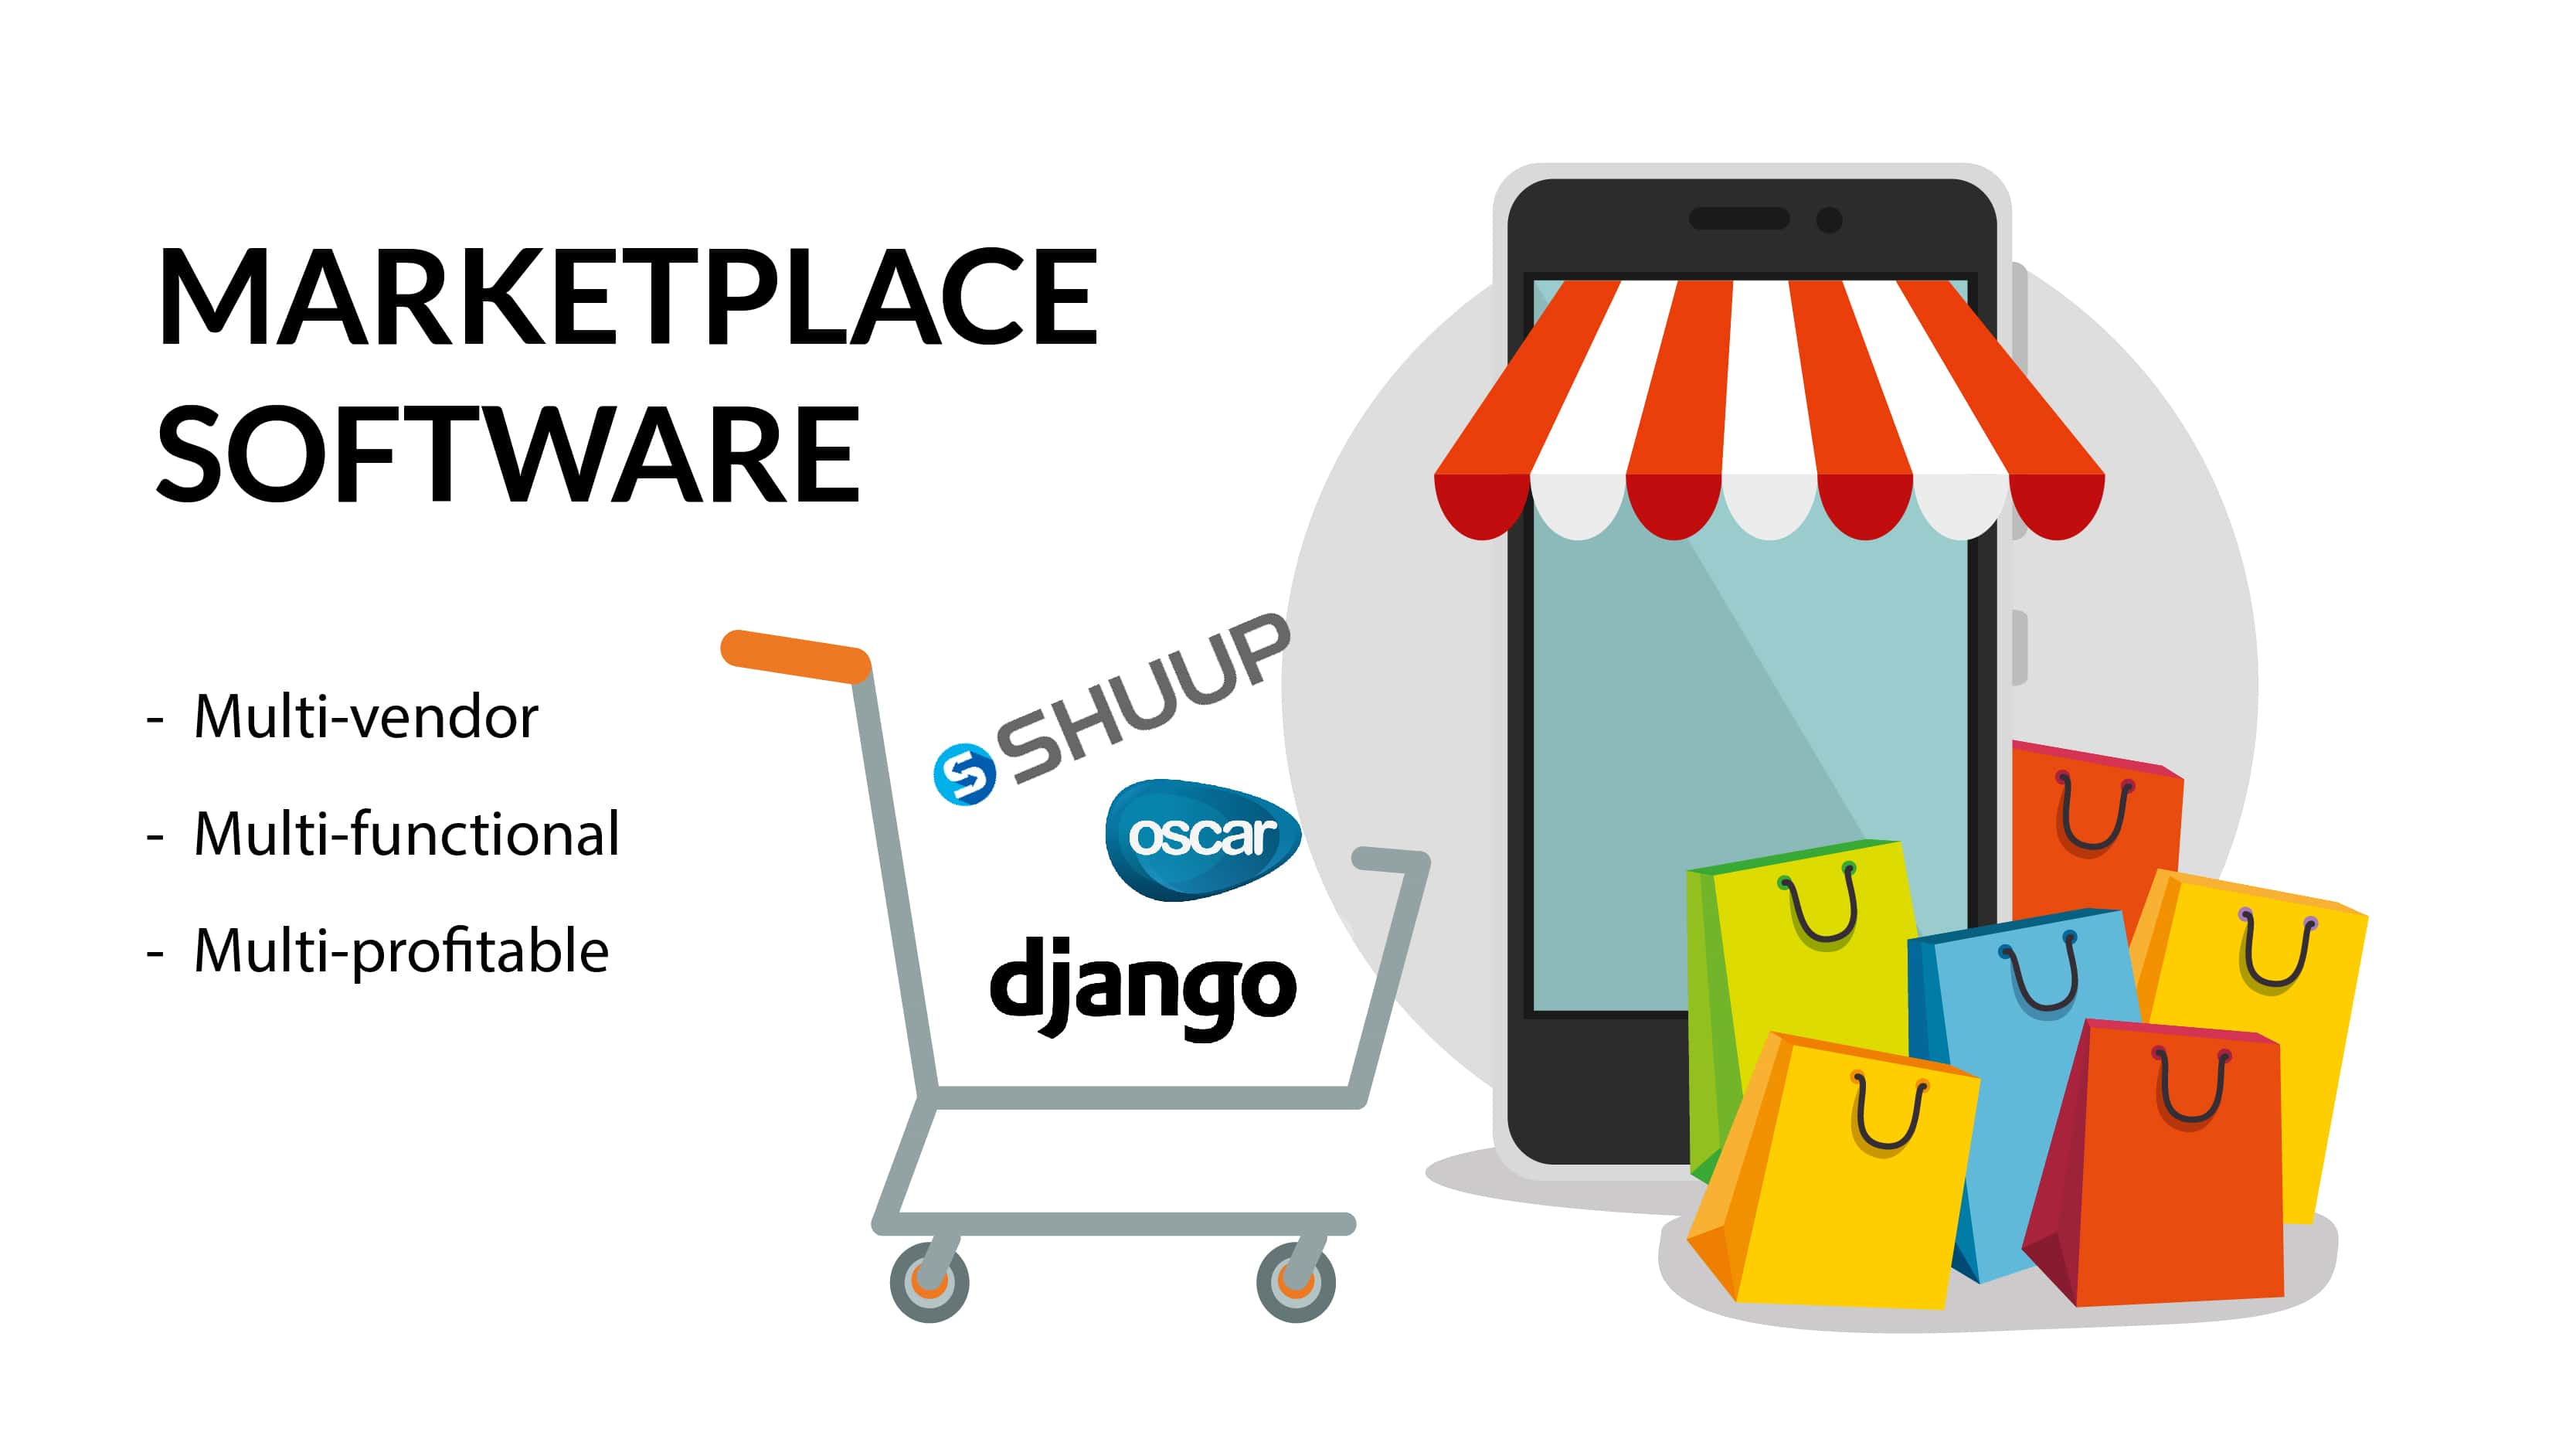 Marketplace software. Multi-vendor. Multi-functional. Multi-profitable.